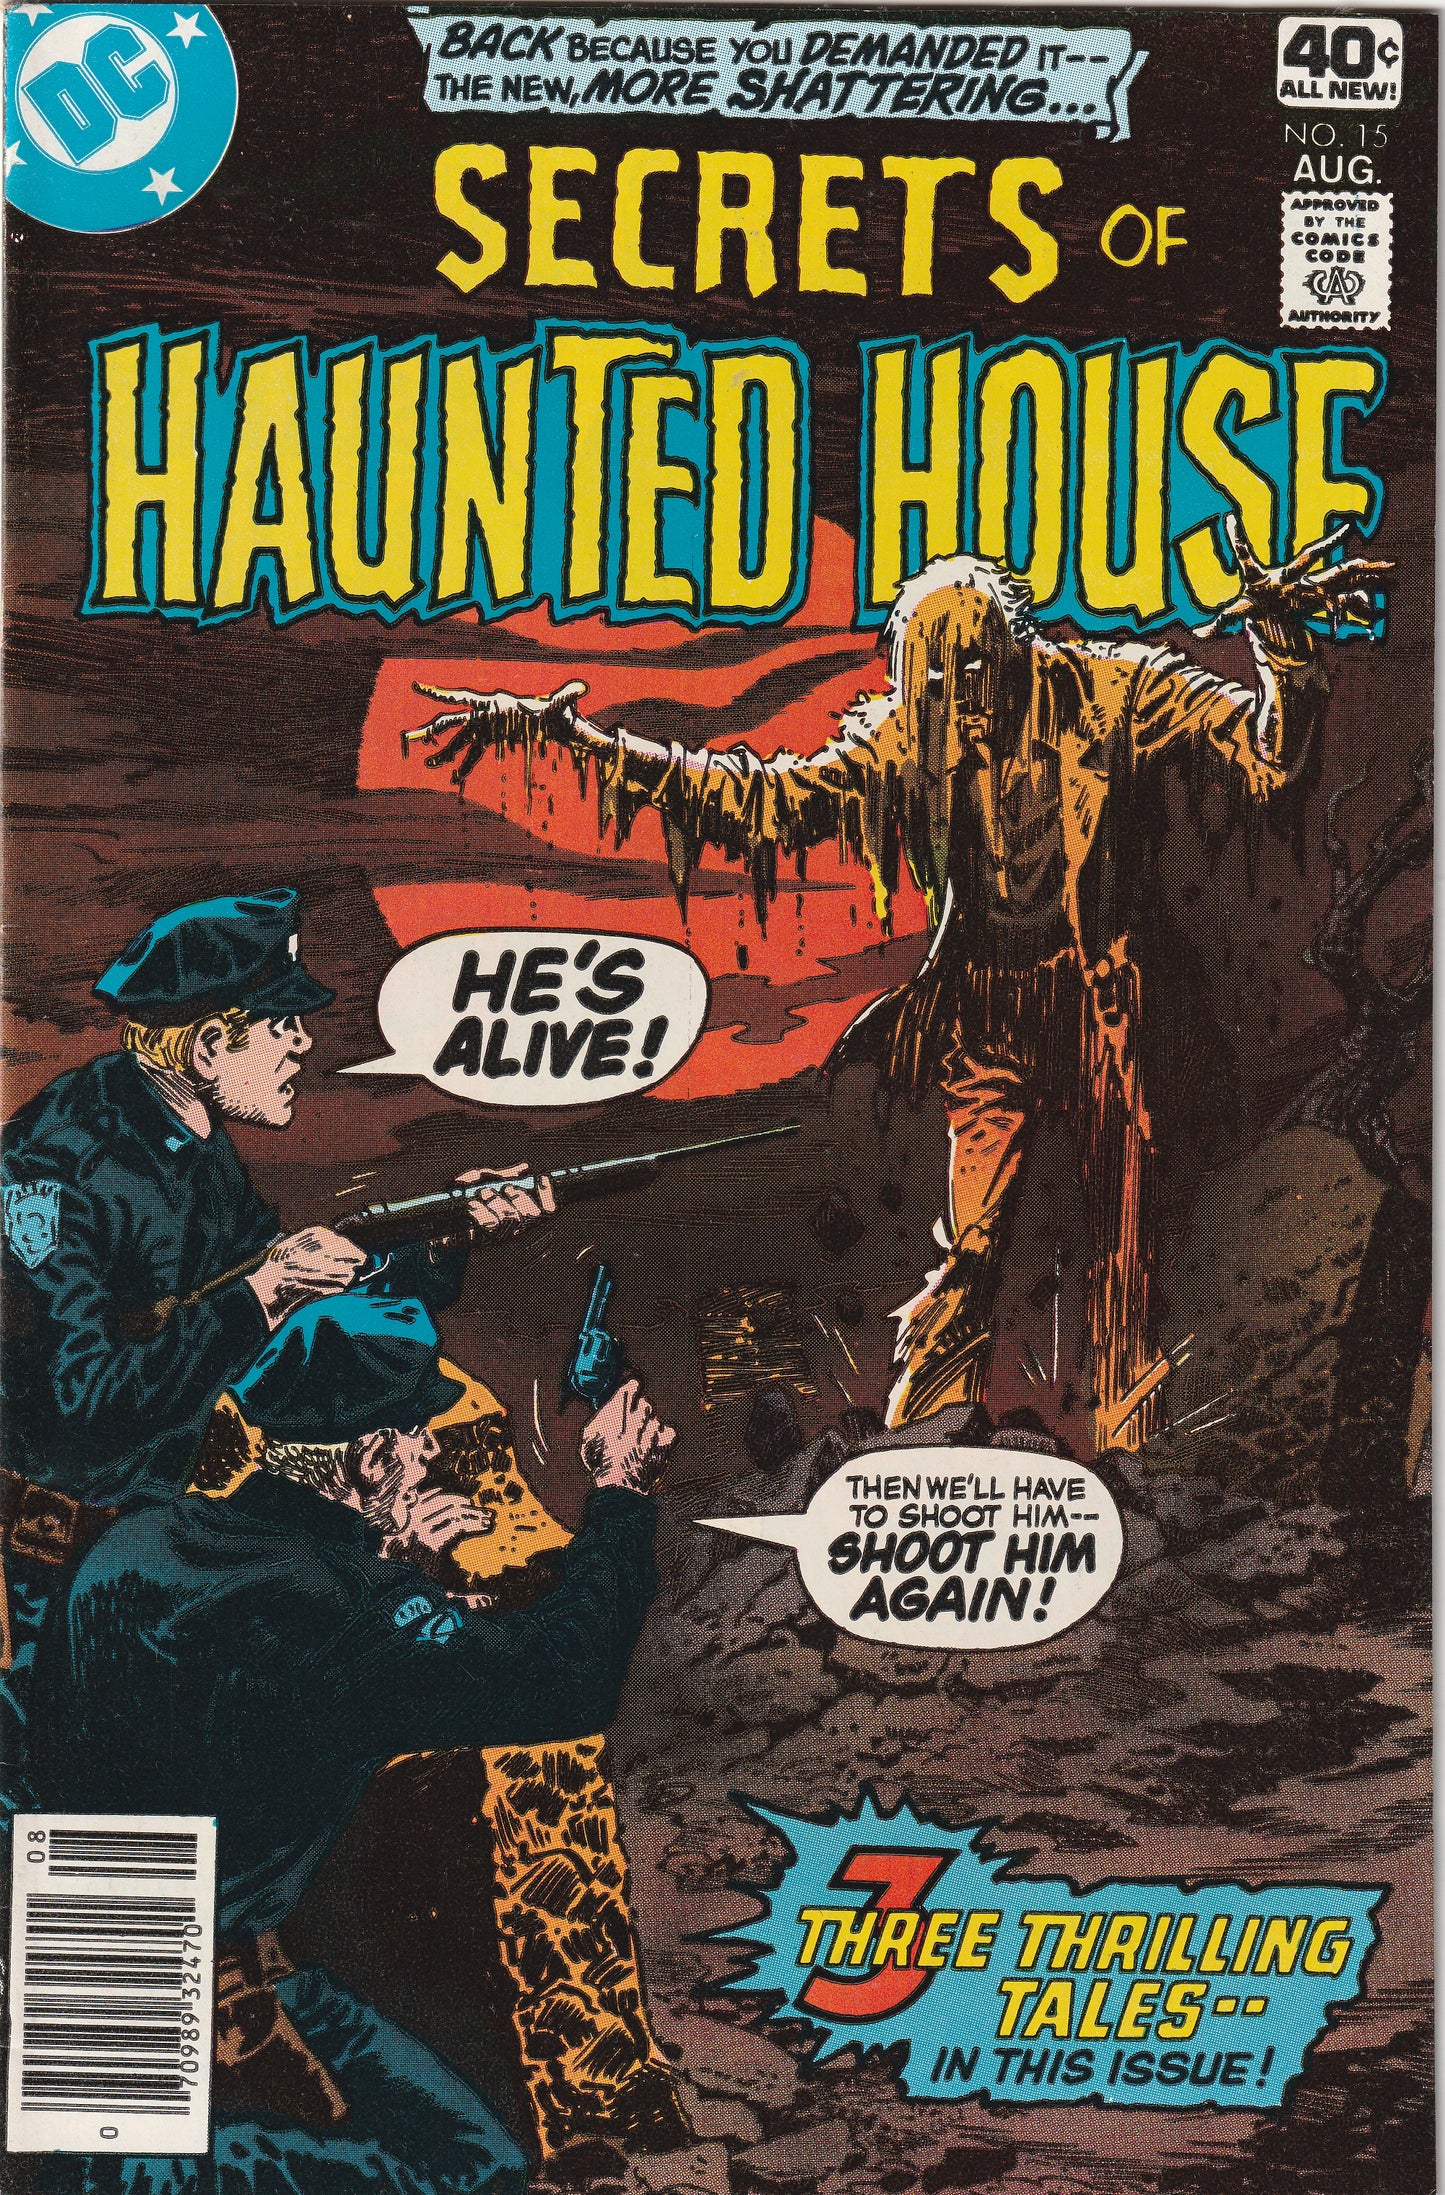 Secrets of Haunted House #15 (1979)